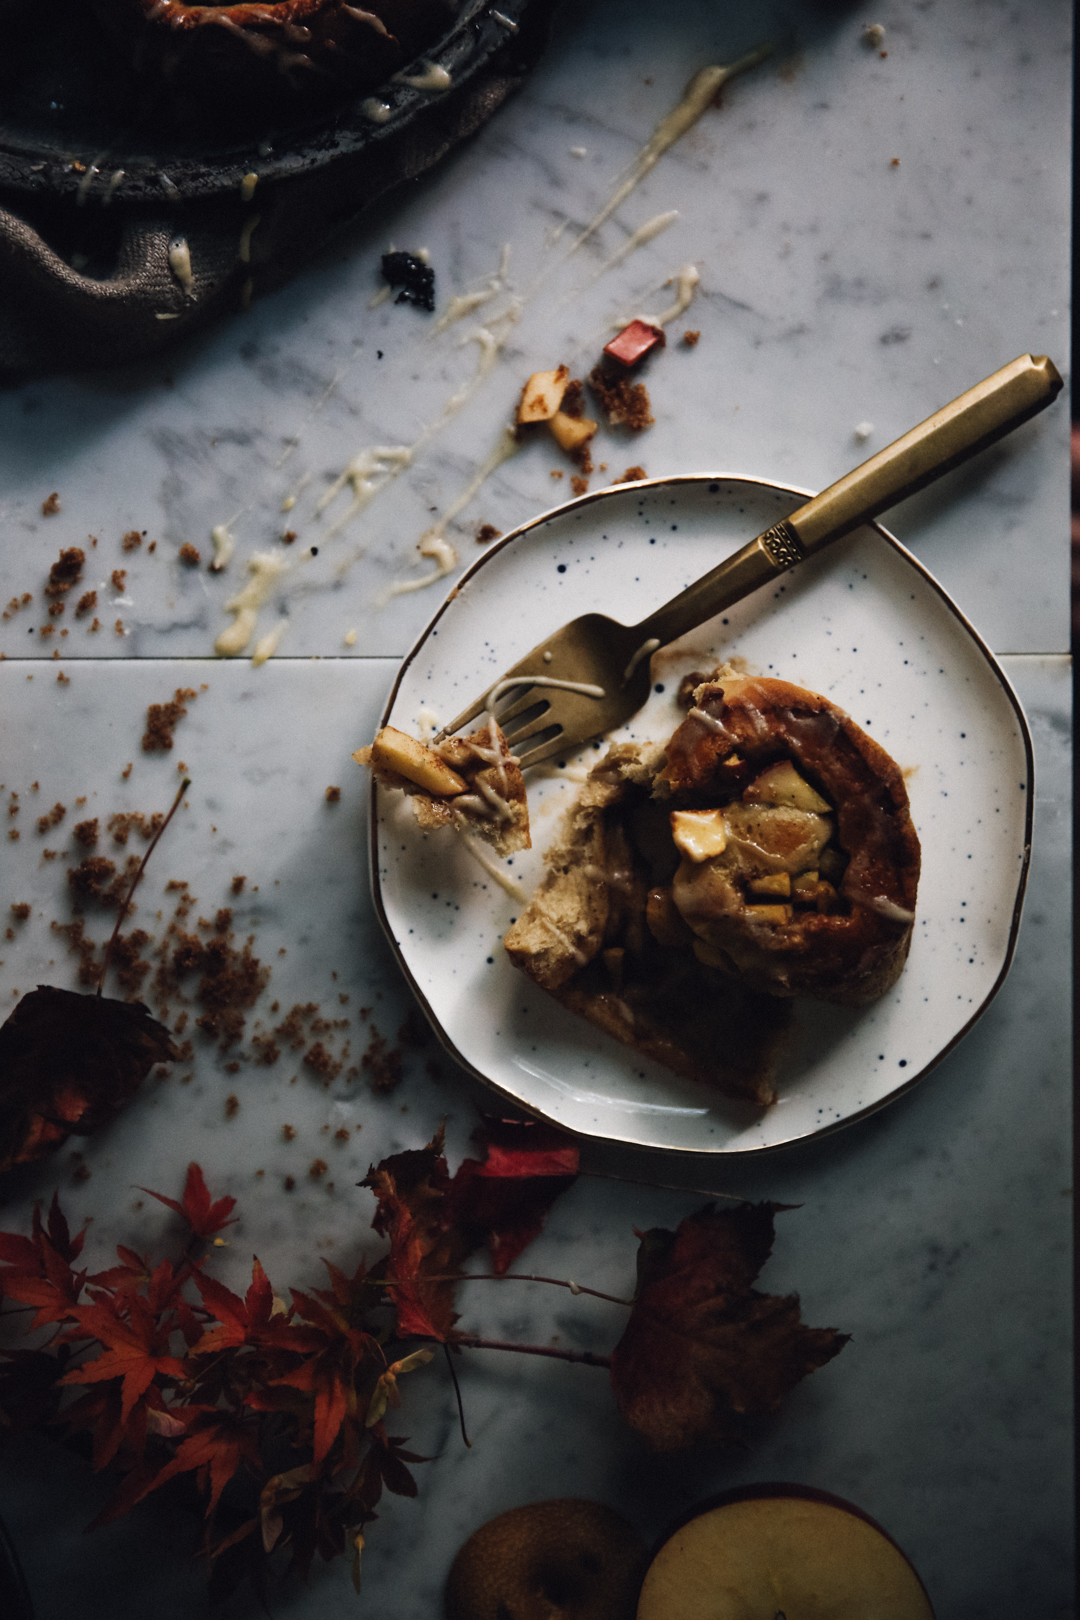 spiced-autumn-cinnamon-rolls-photography-styling-recipe-by-christiann-koepke-of-christiannkoepke-com-17